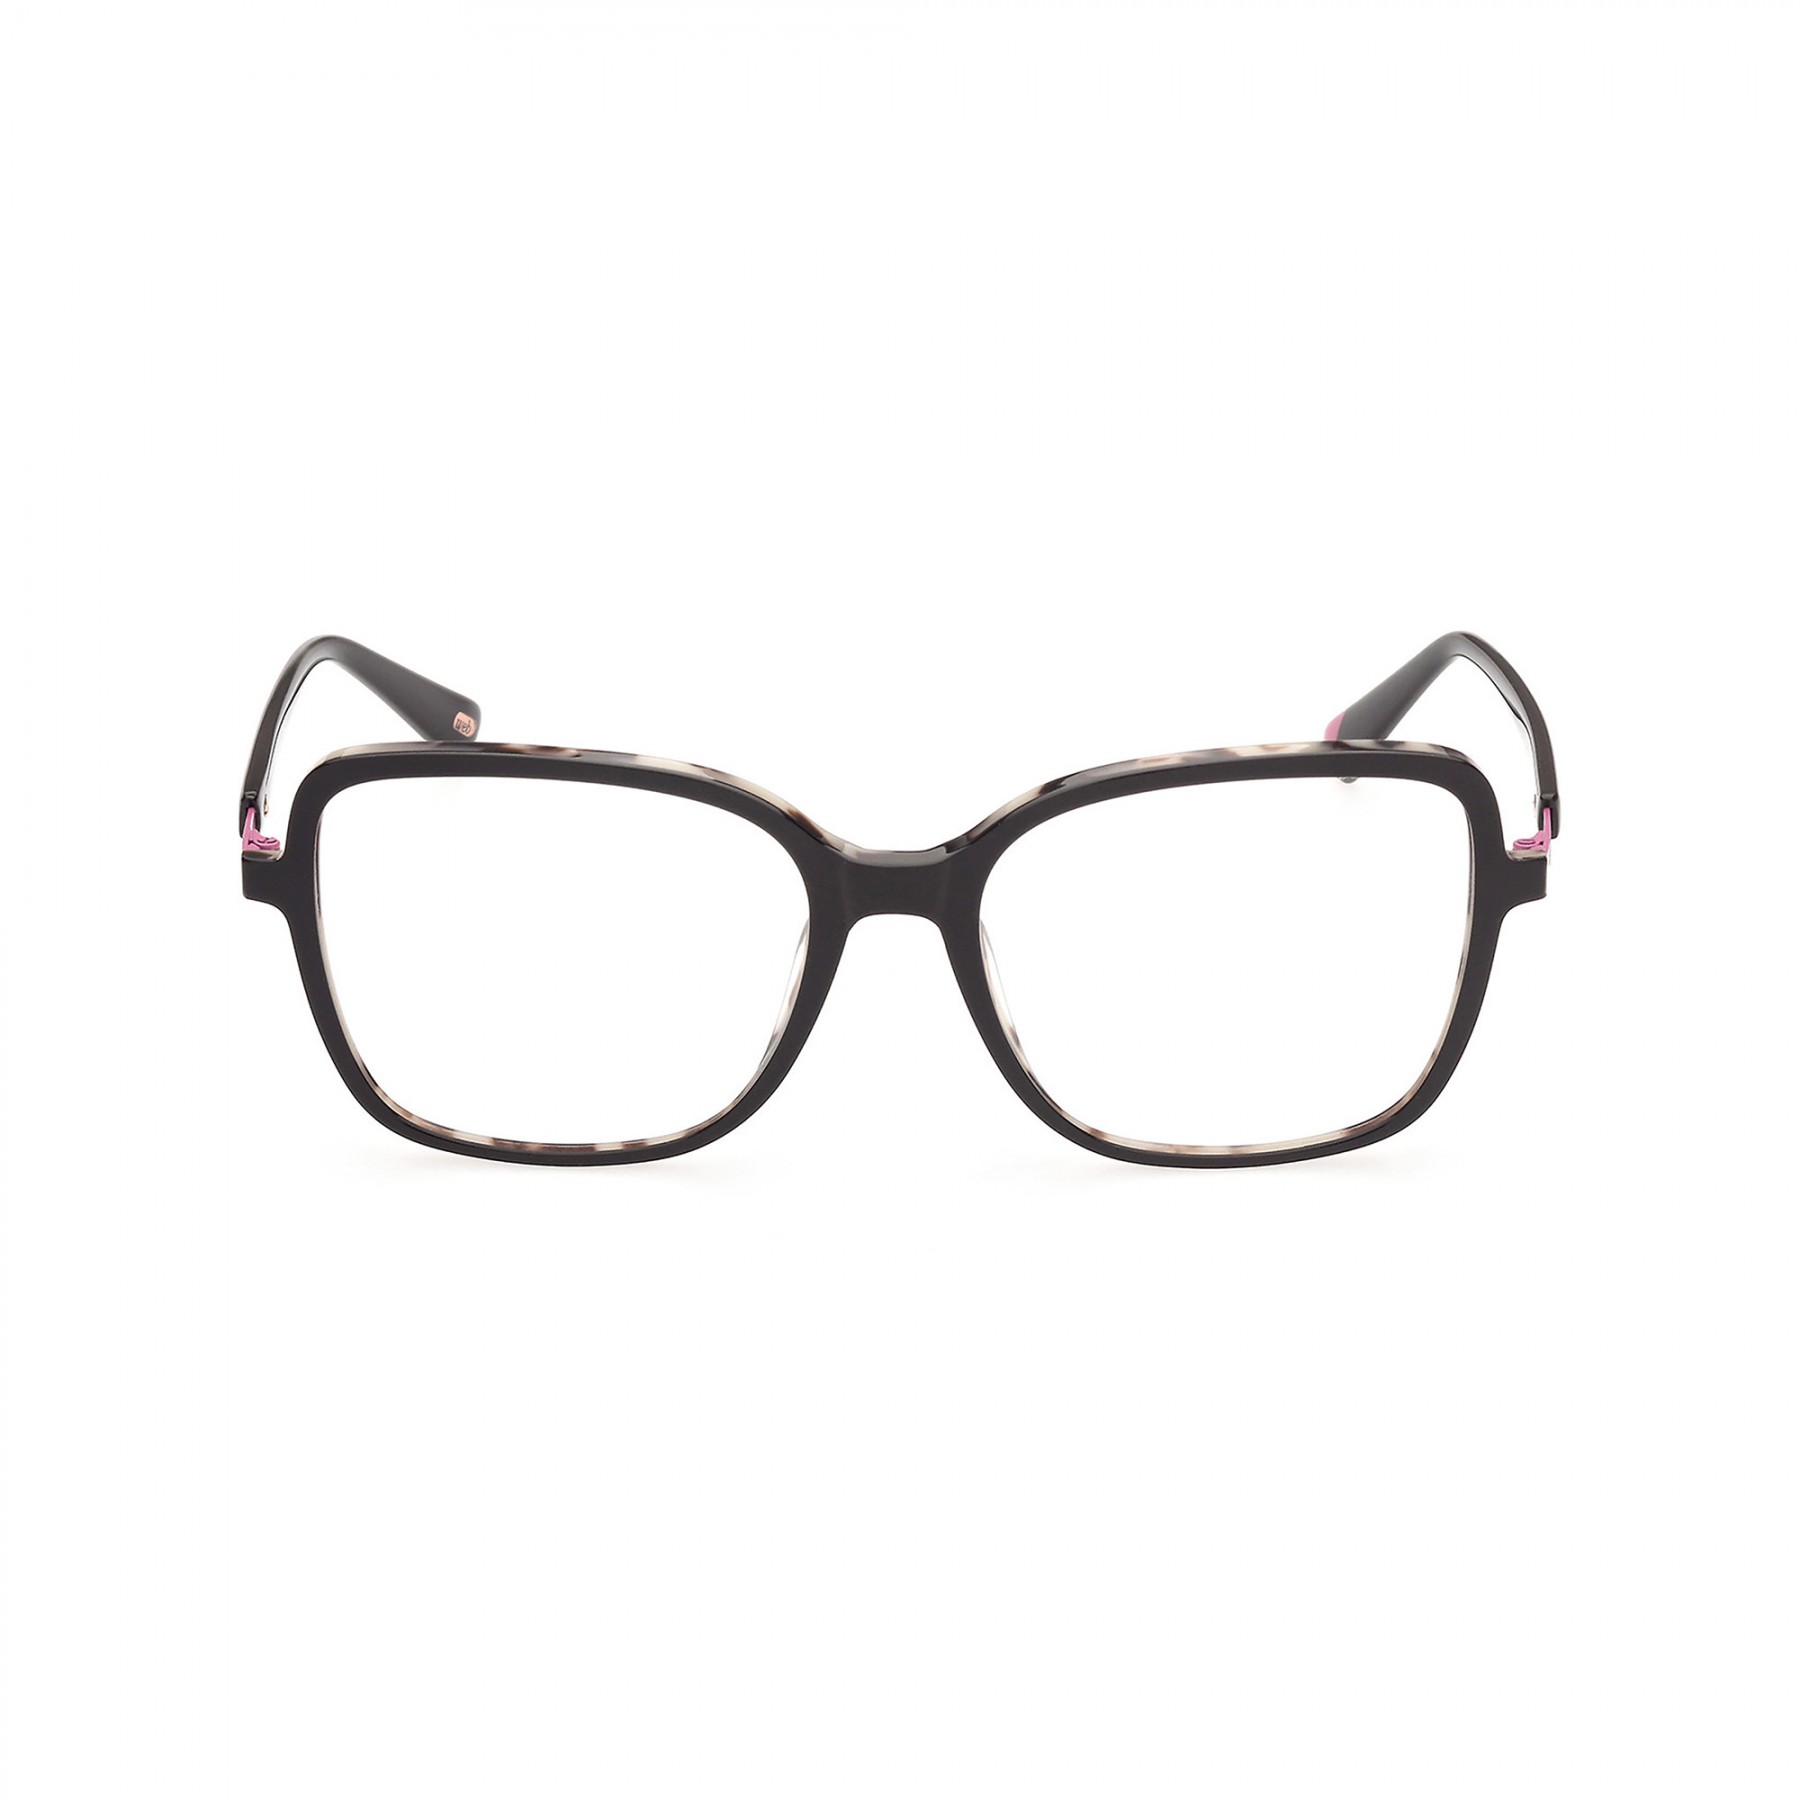 Web 5333 005 - Oculos de Grau